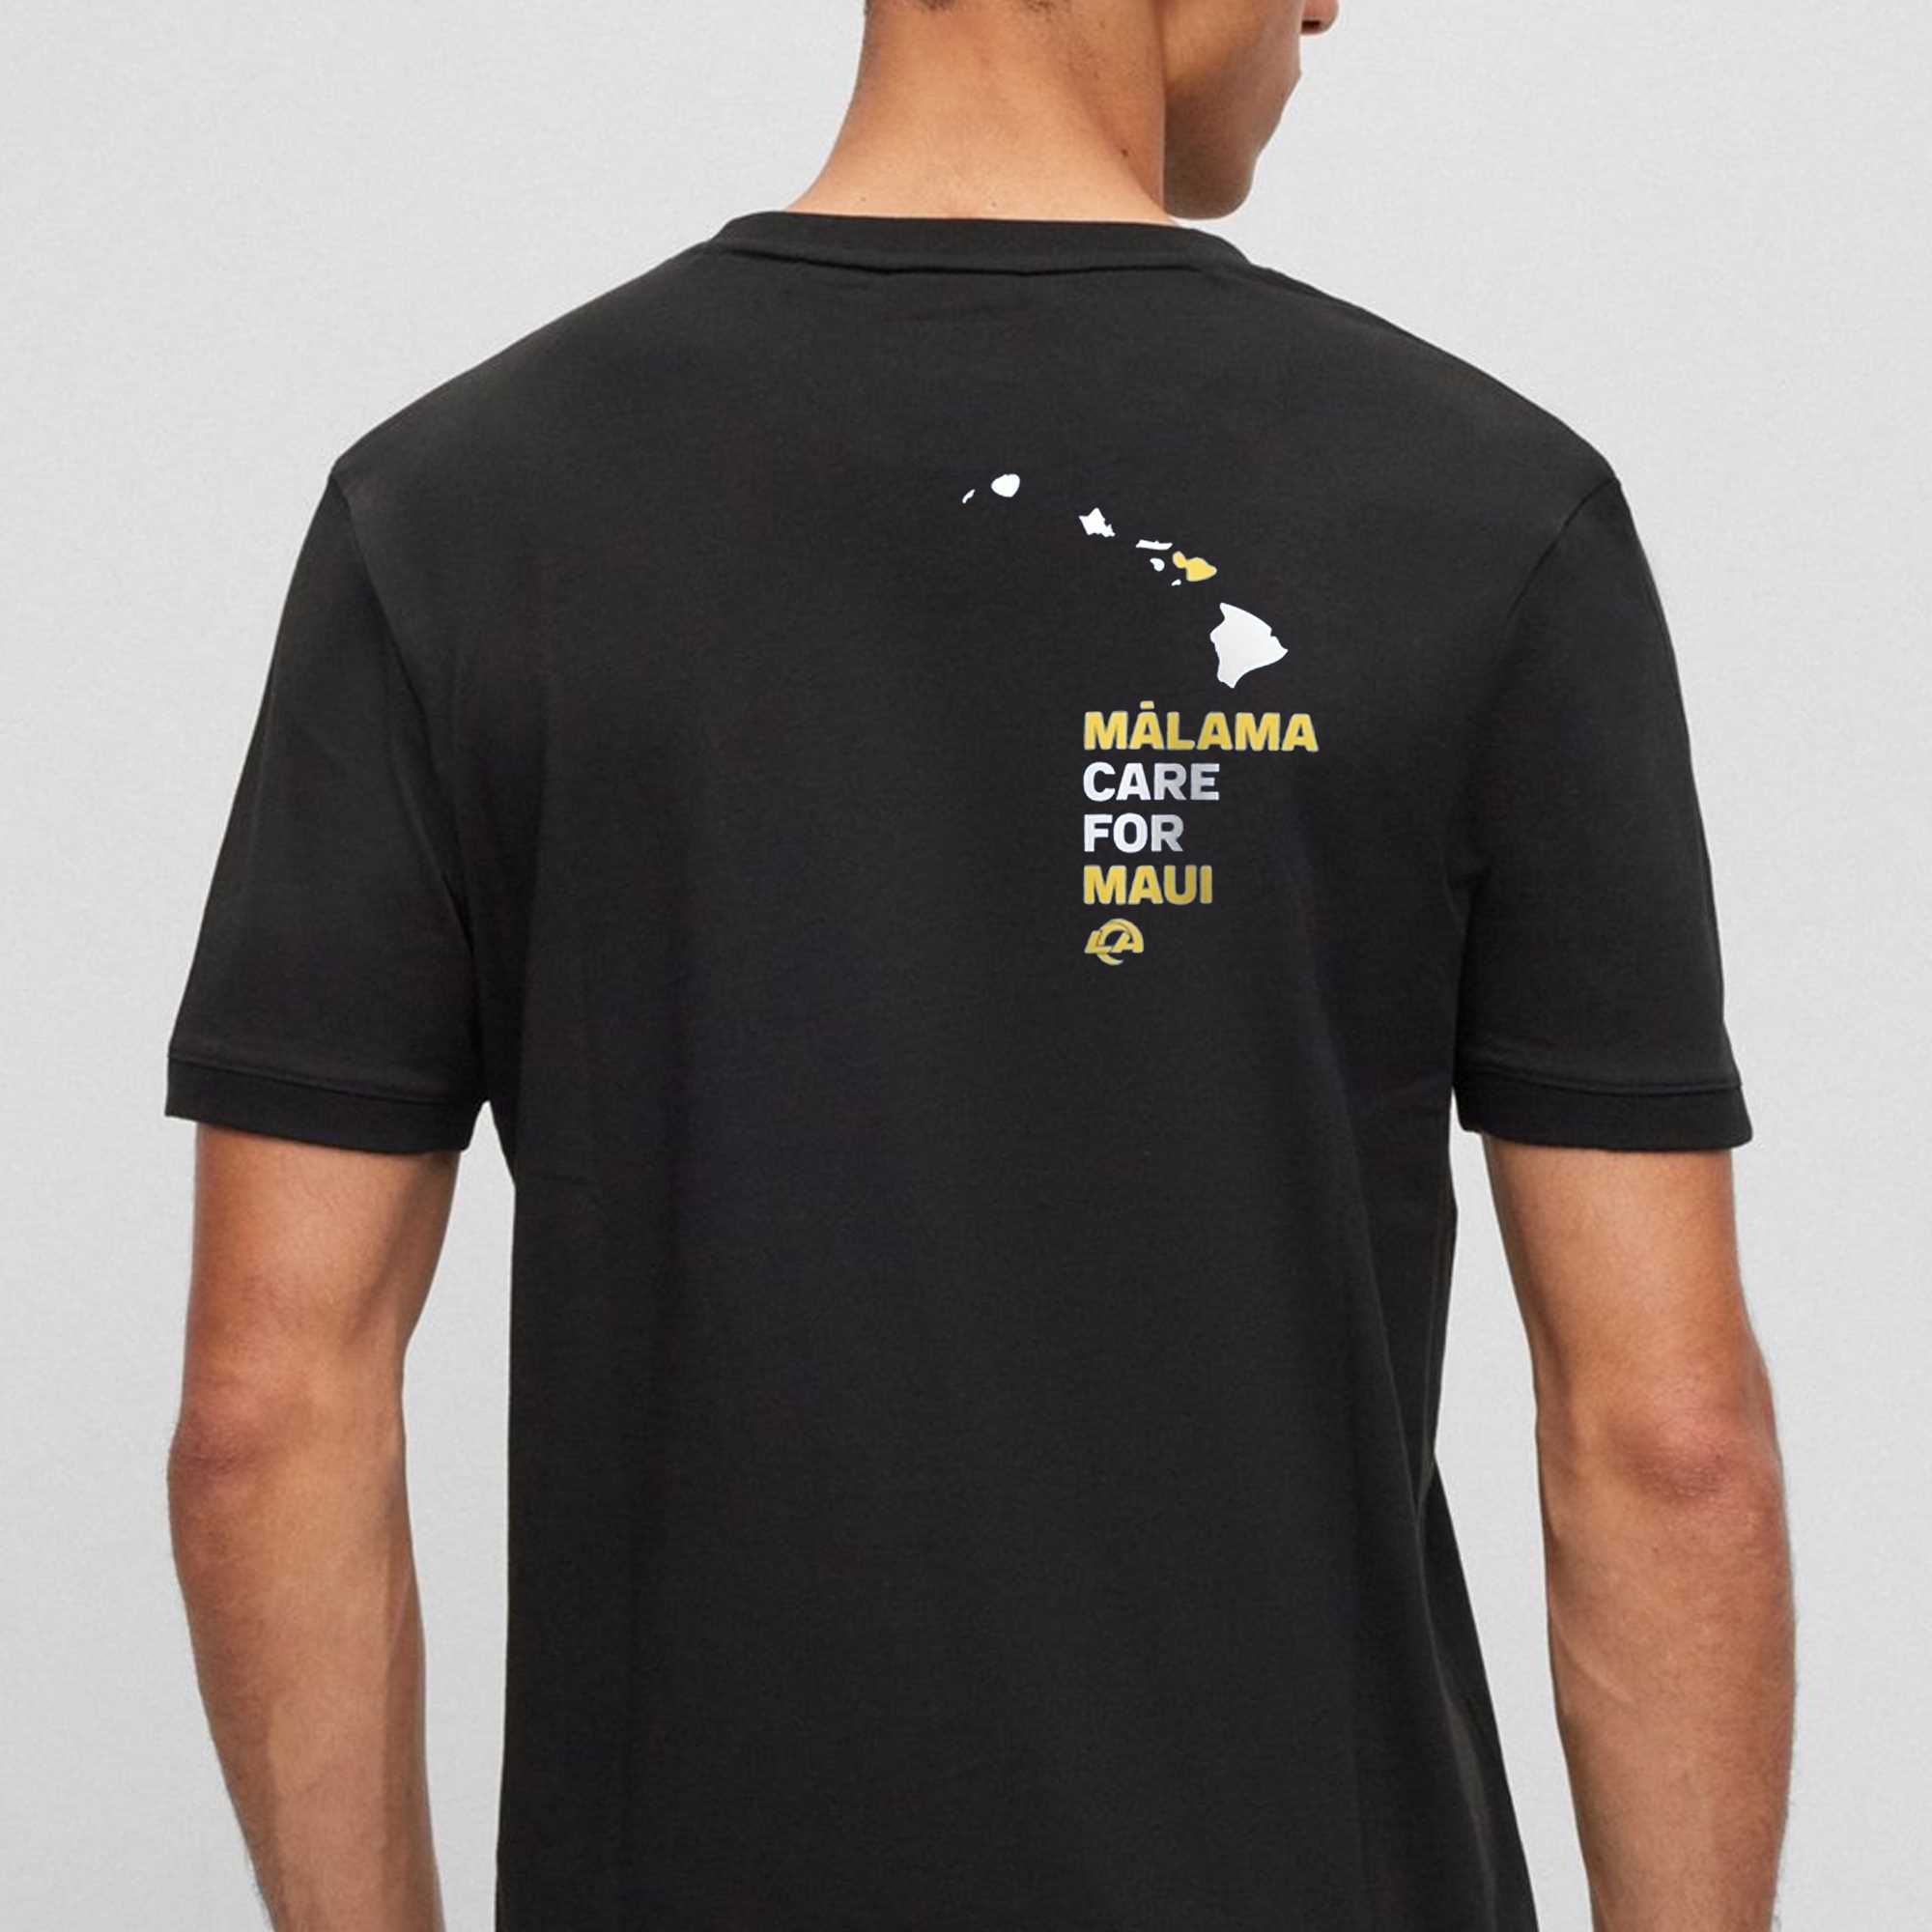 Los Angeles Rams Maui Relief T-shirt - Shibtee Clothing